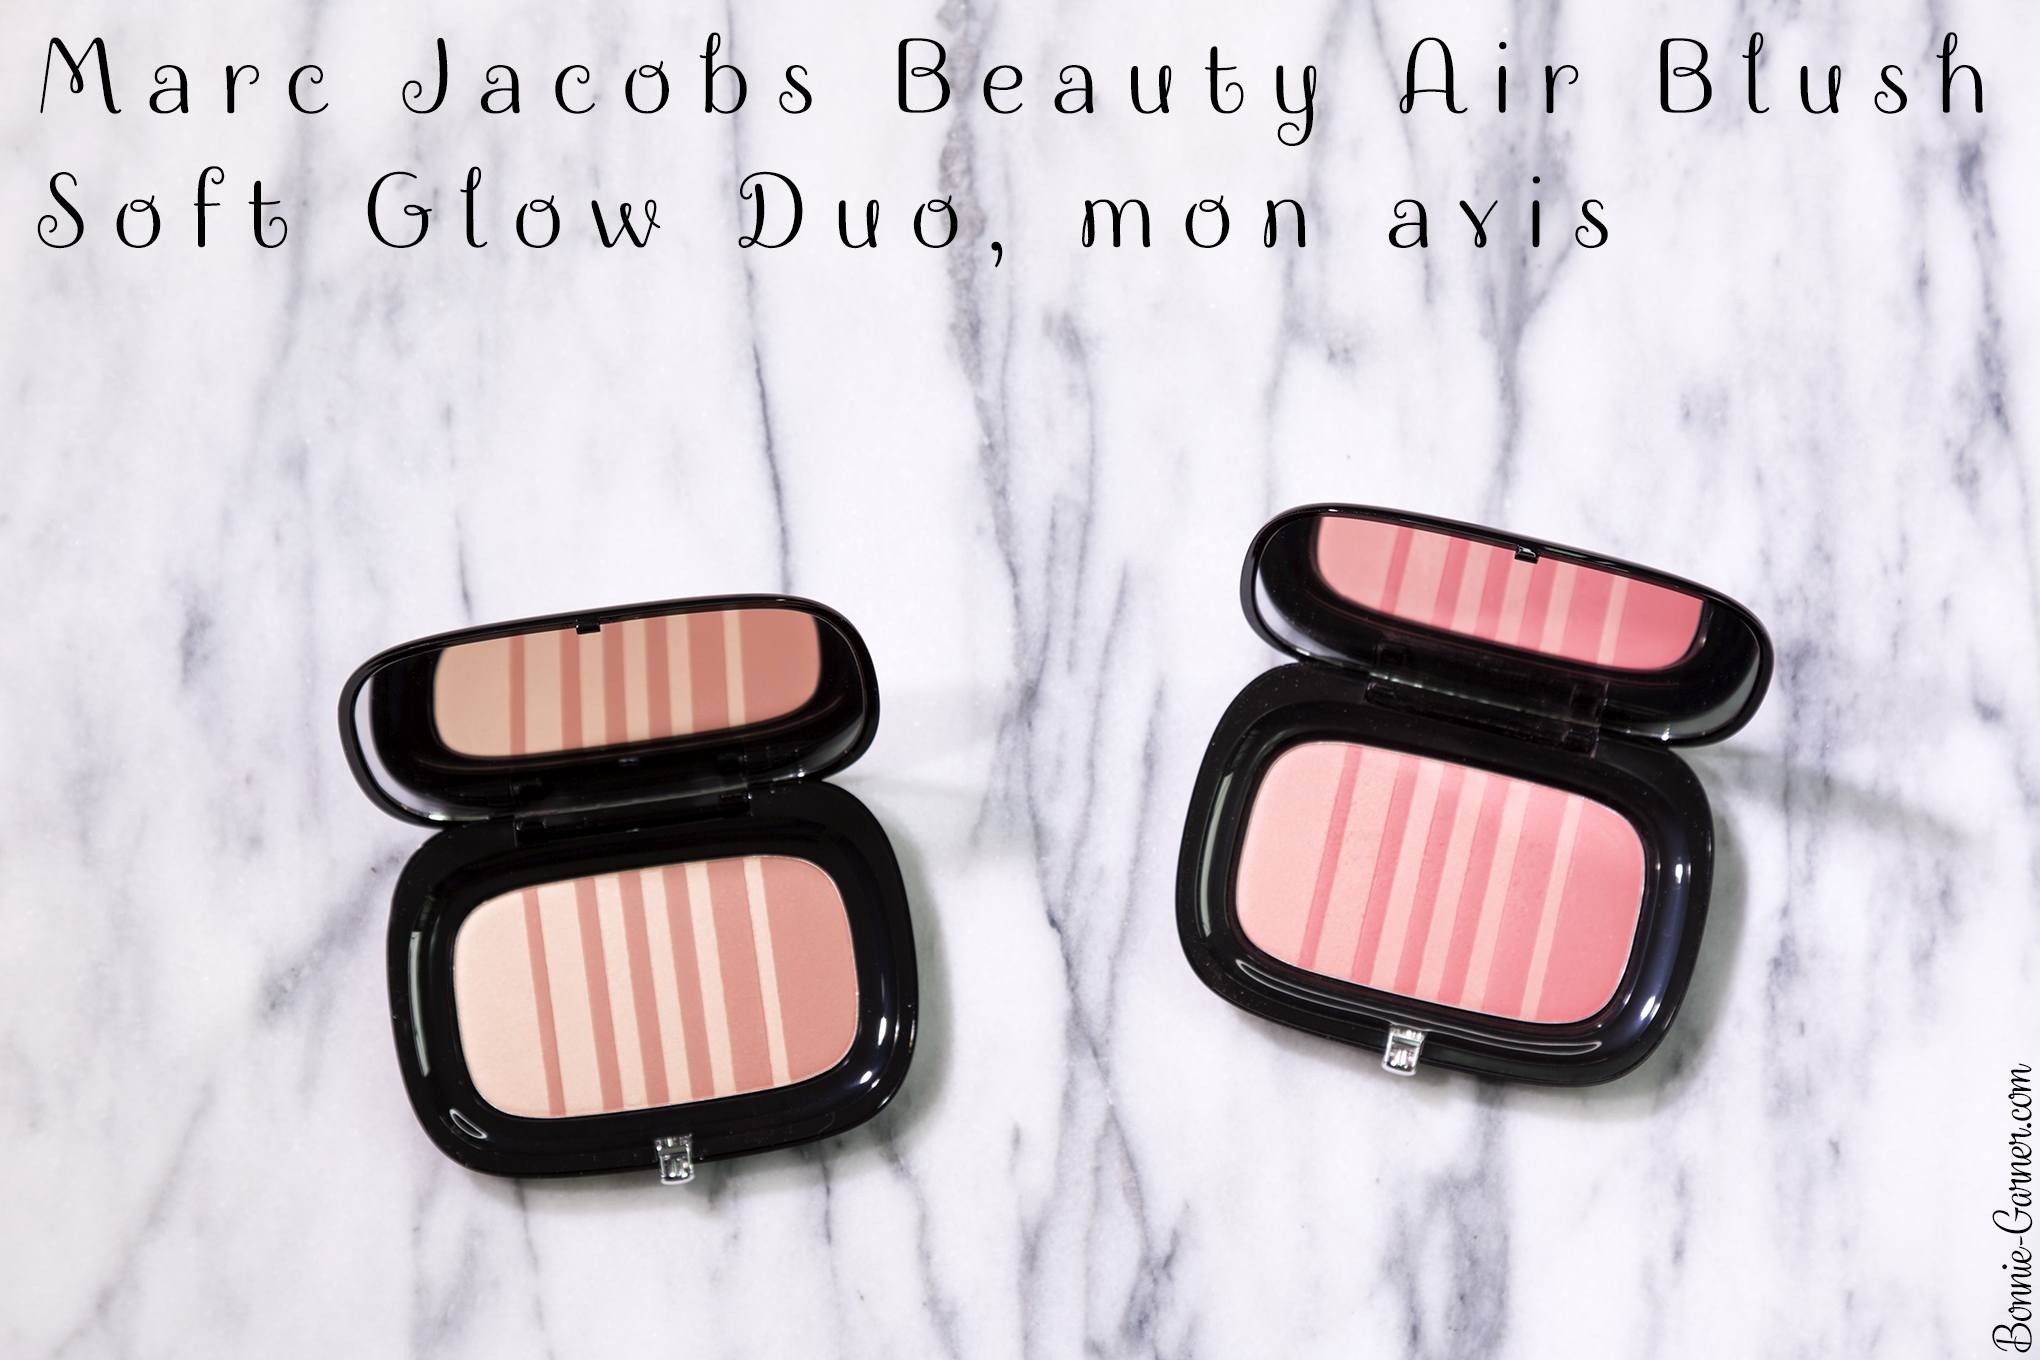 Marc Jacobs Beauty Air Blush Soft Glow Duo, mon avis